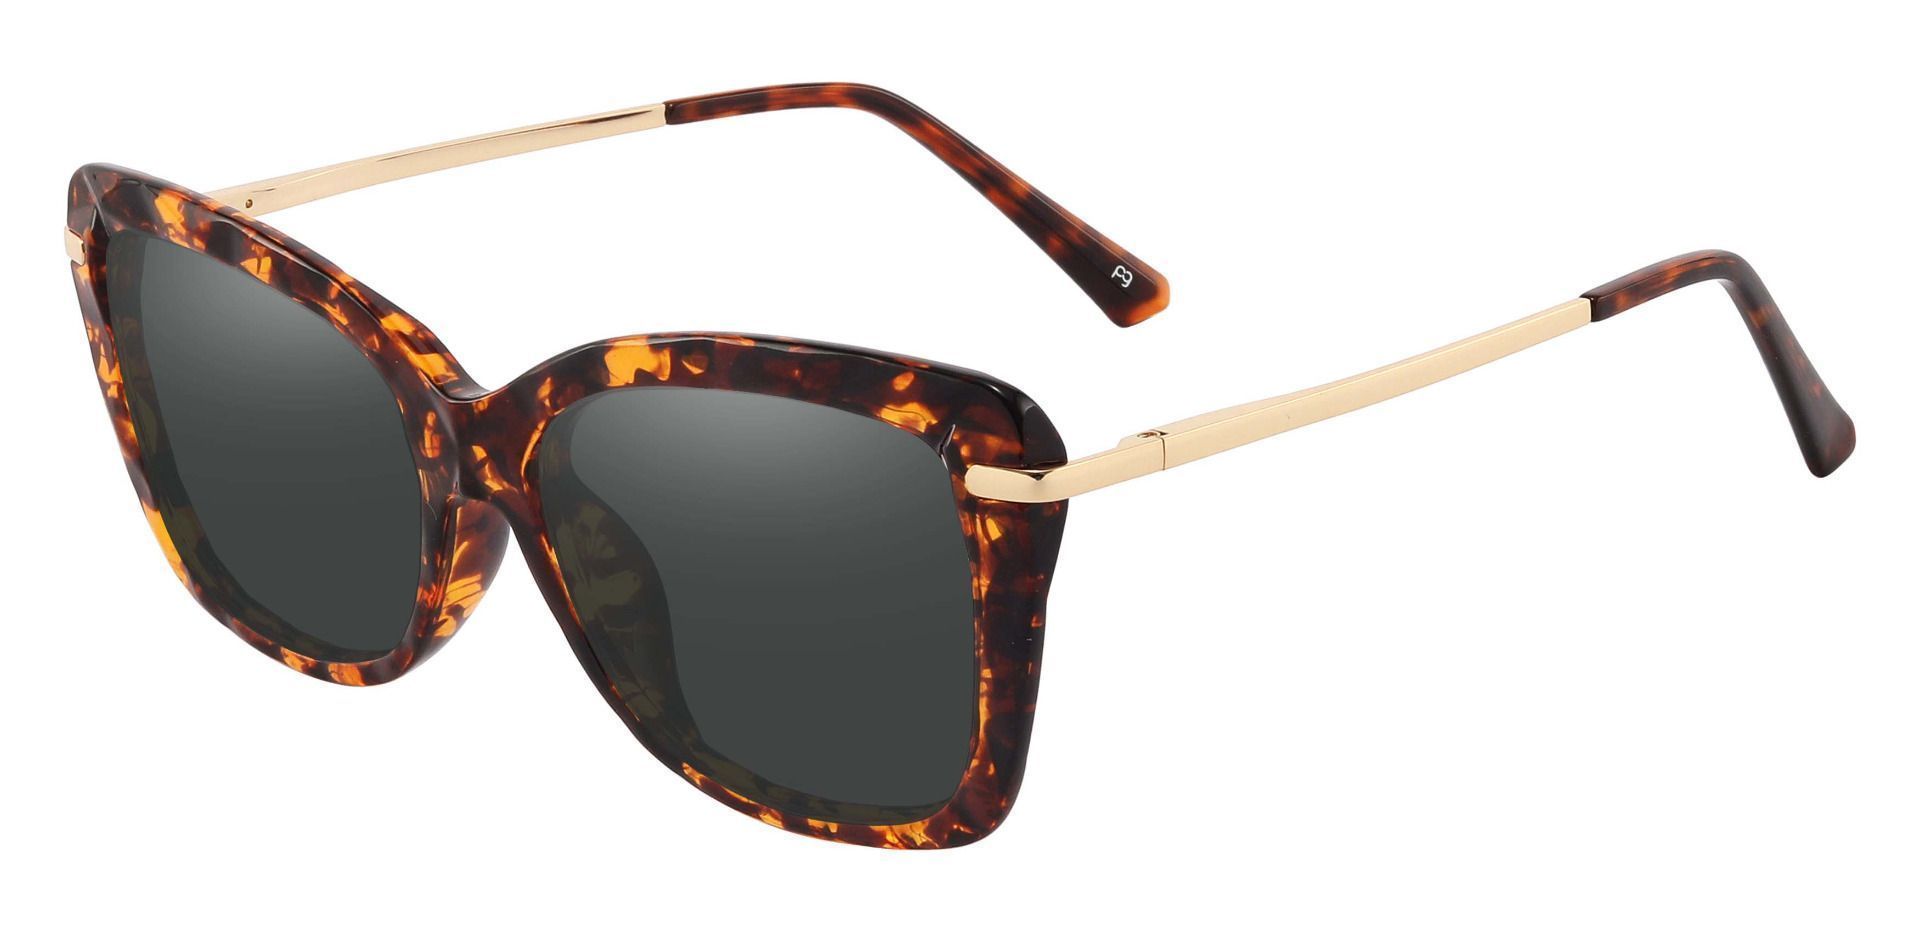 Shoshanna Rectangle Non-Rx Sunglasses - Tortoise Frame With Gray Lenses